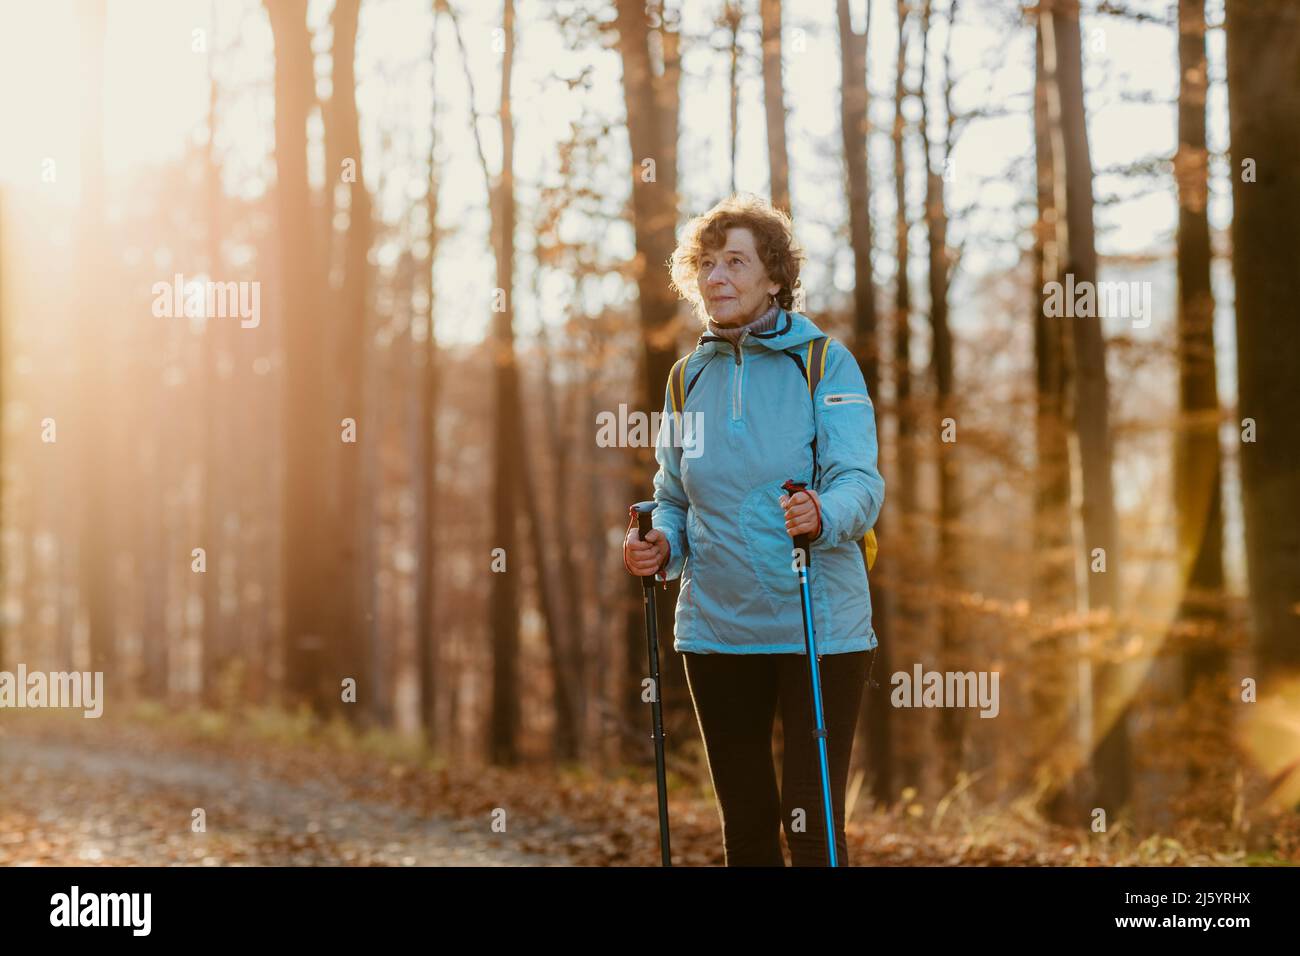 Portrait of Elderly Woman with Trekking Poles in Woods. Medium Full Shot of Senior Female Hiker with Hiking Sticks Taking Break from Walking in Woods. Stock Photo